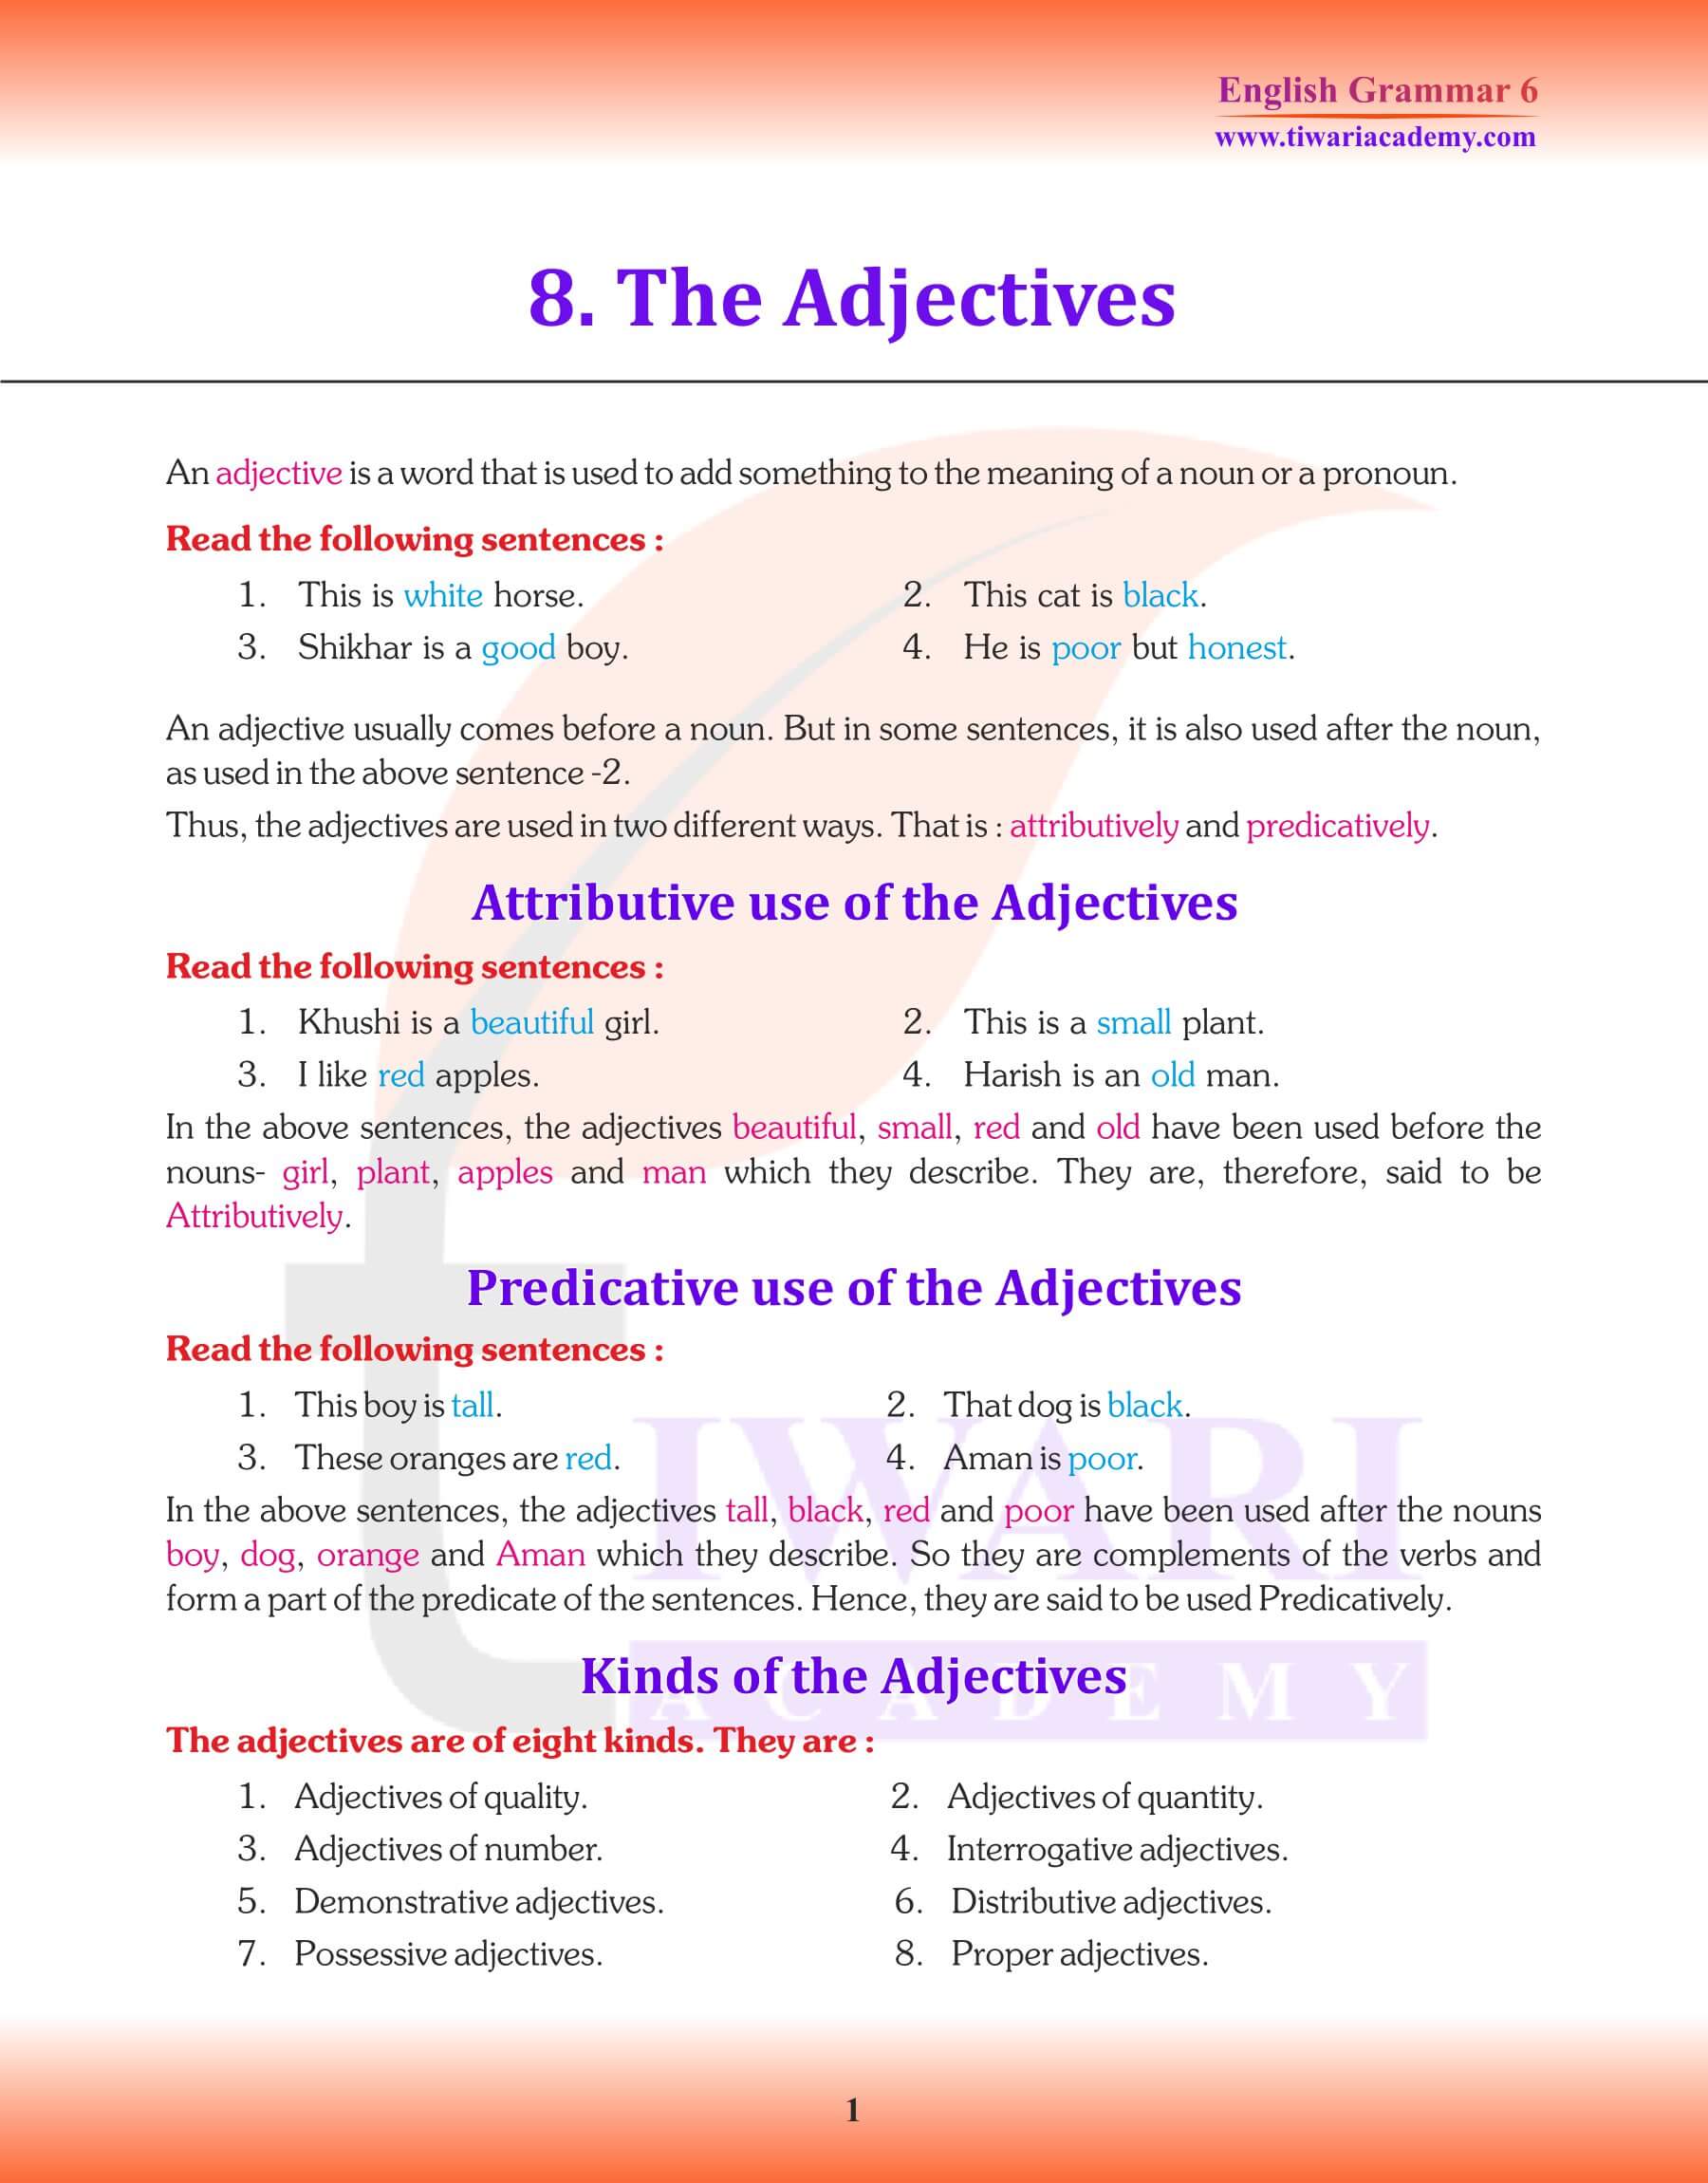 Class 6 Grammar The Adjective notes